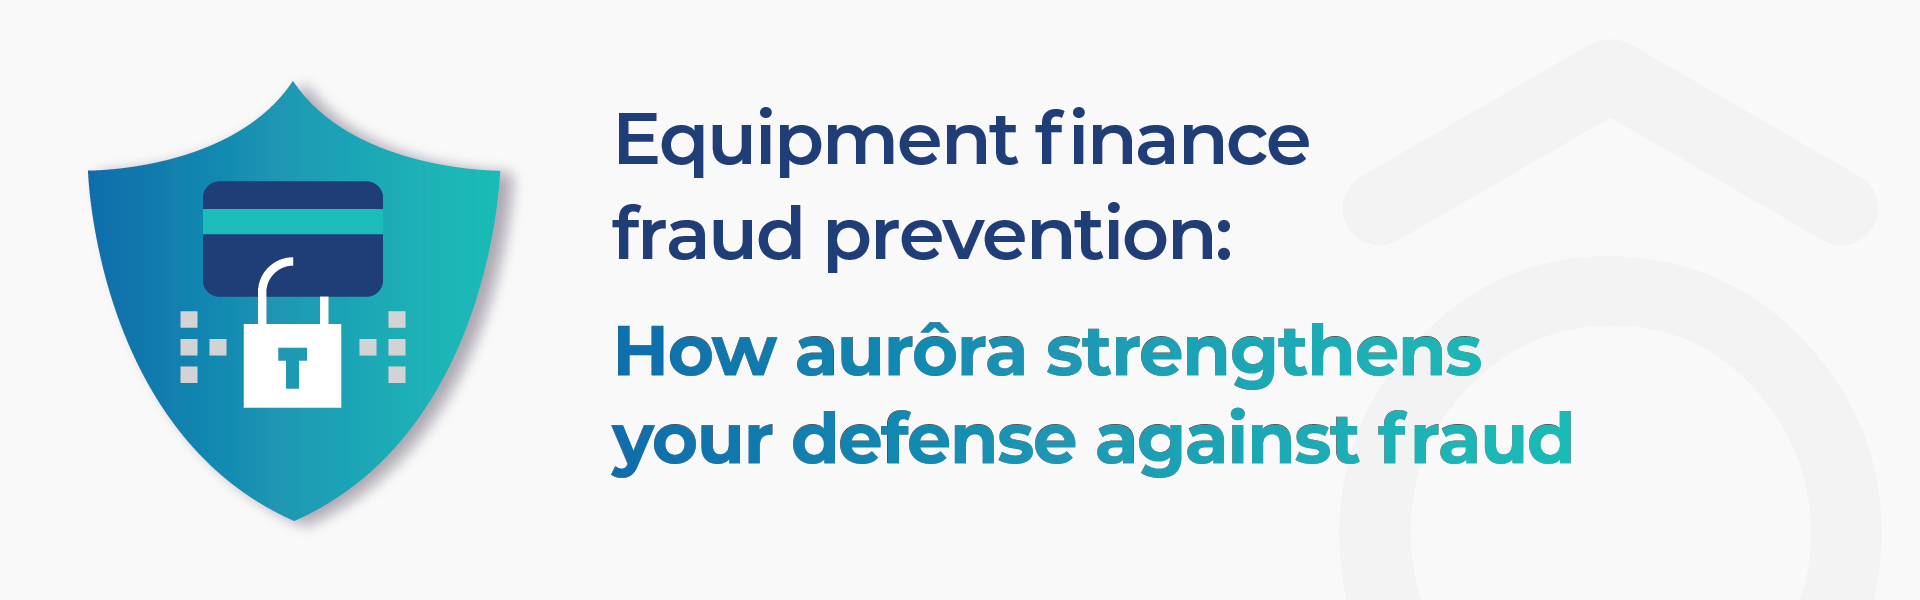 Title - Equipment Finance Fraud Prevention: How aurora strengthens your defense against fraud